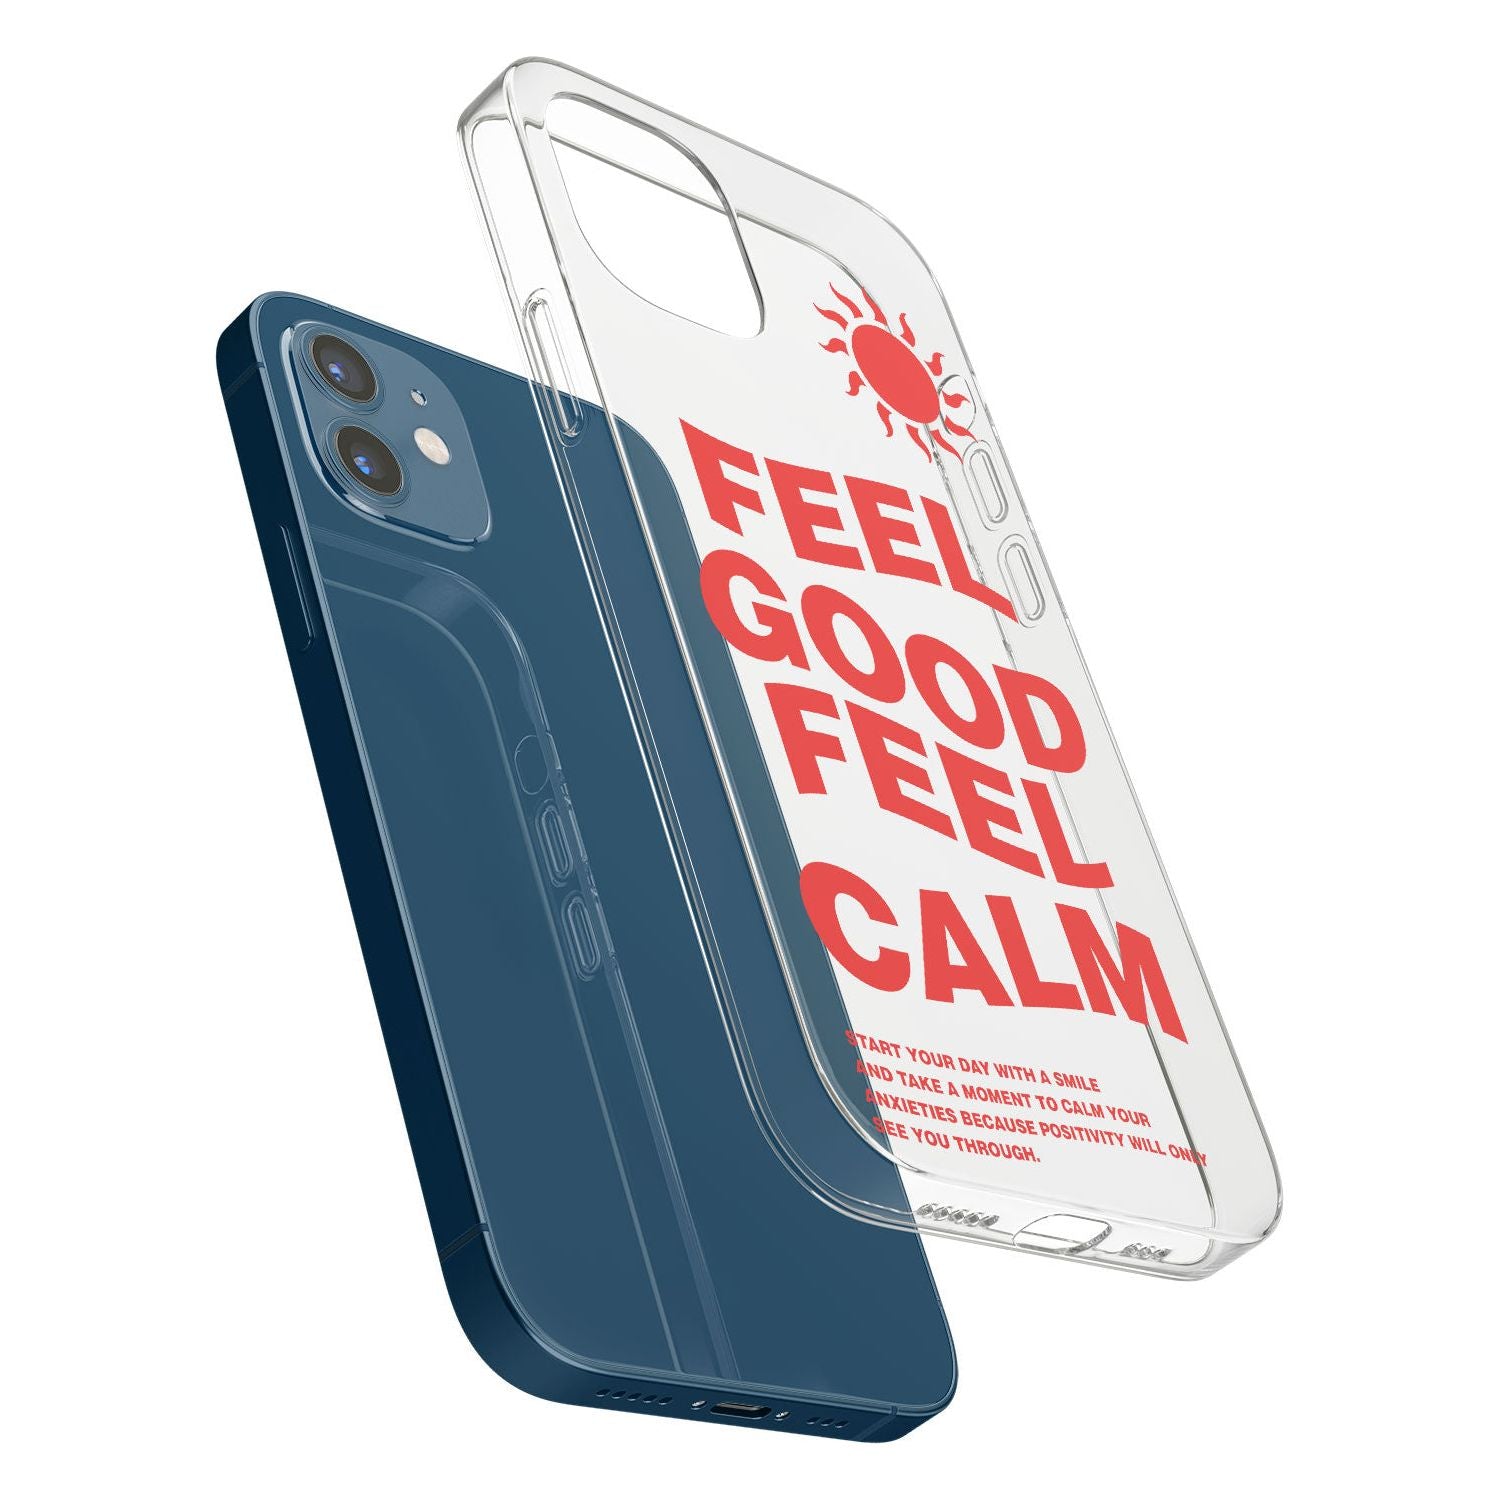 Feel Good Feel Calm (Green) Impact Phone Case for iPhone 11, iphone 12